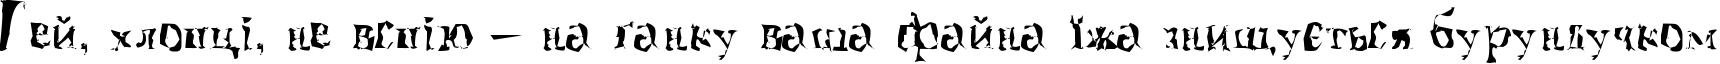 Пример написания шрифтом A Font with Serifs. Disordered текста на украинском